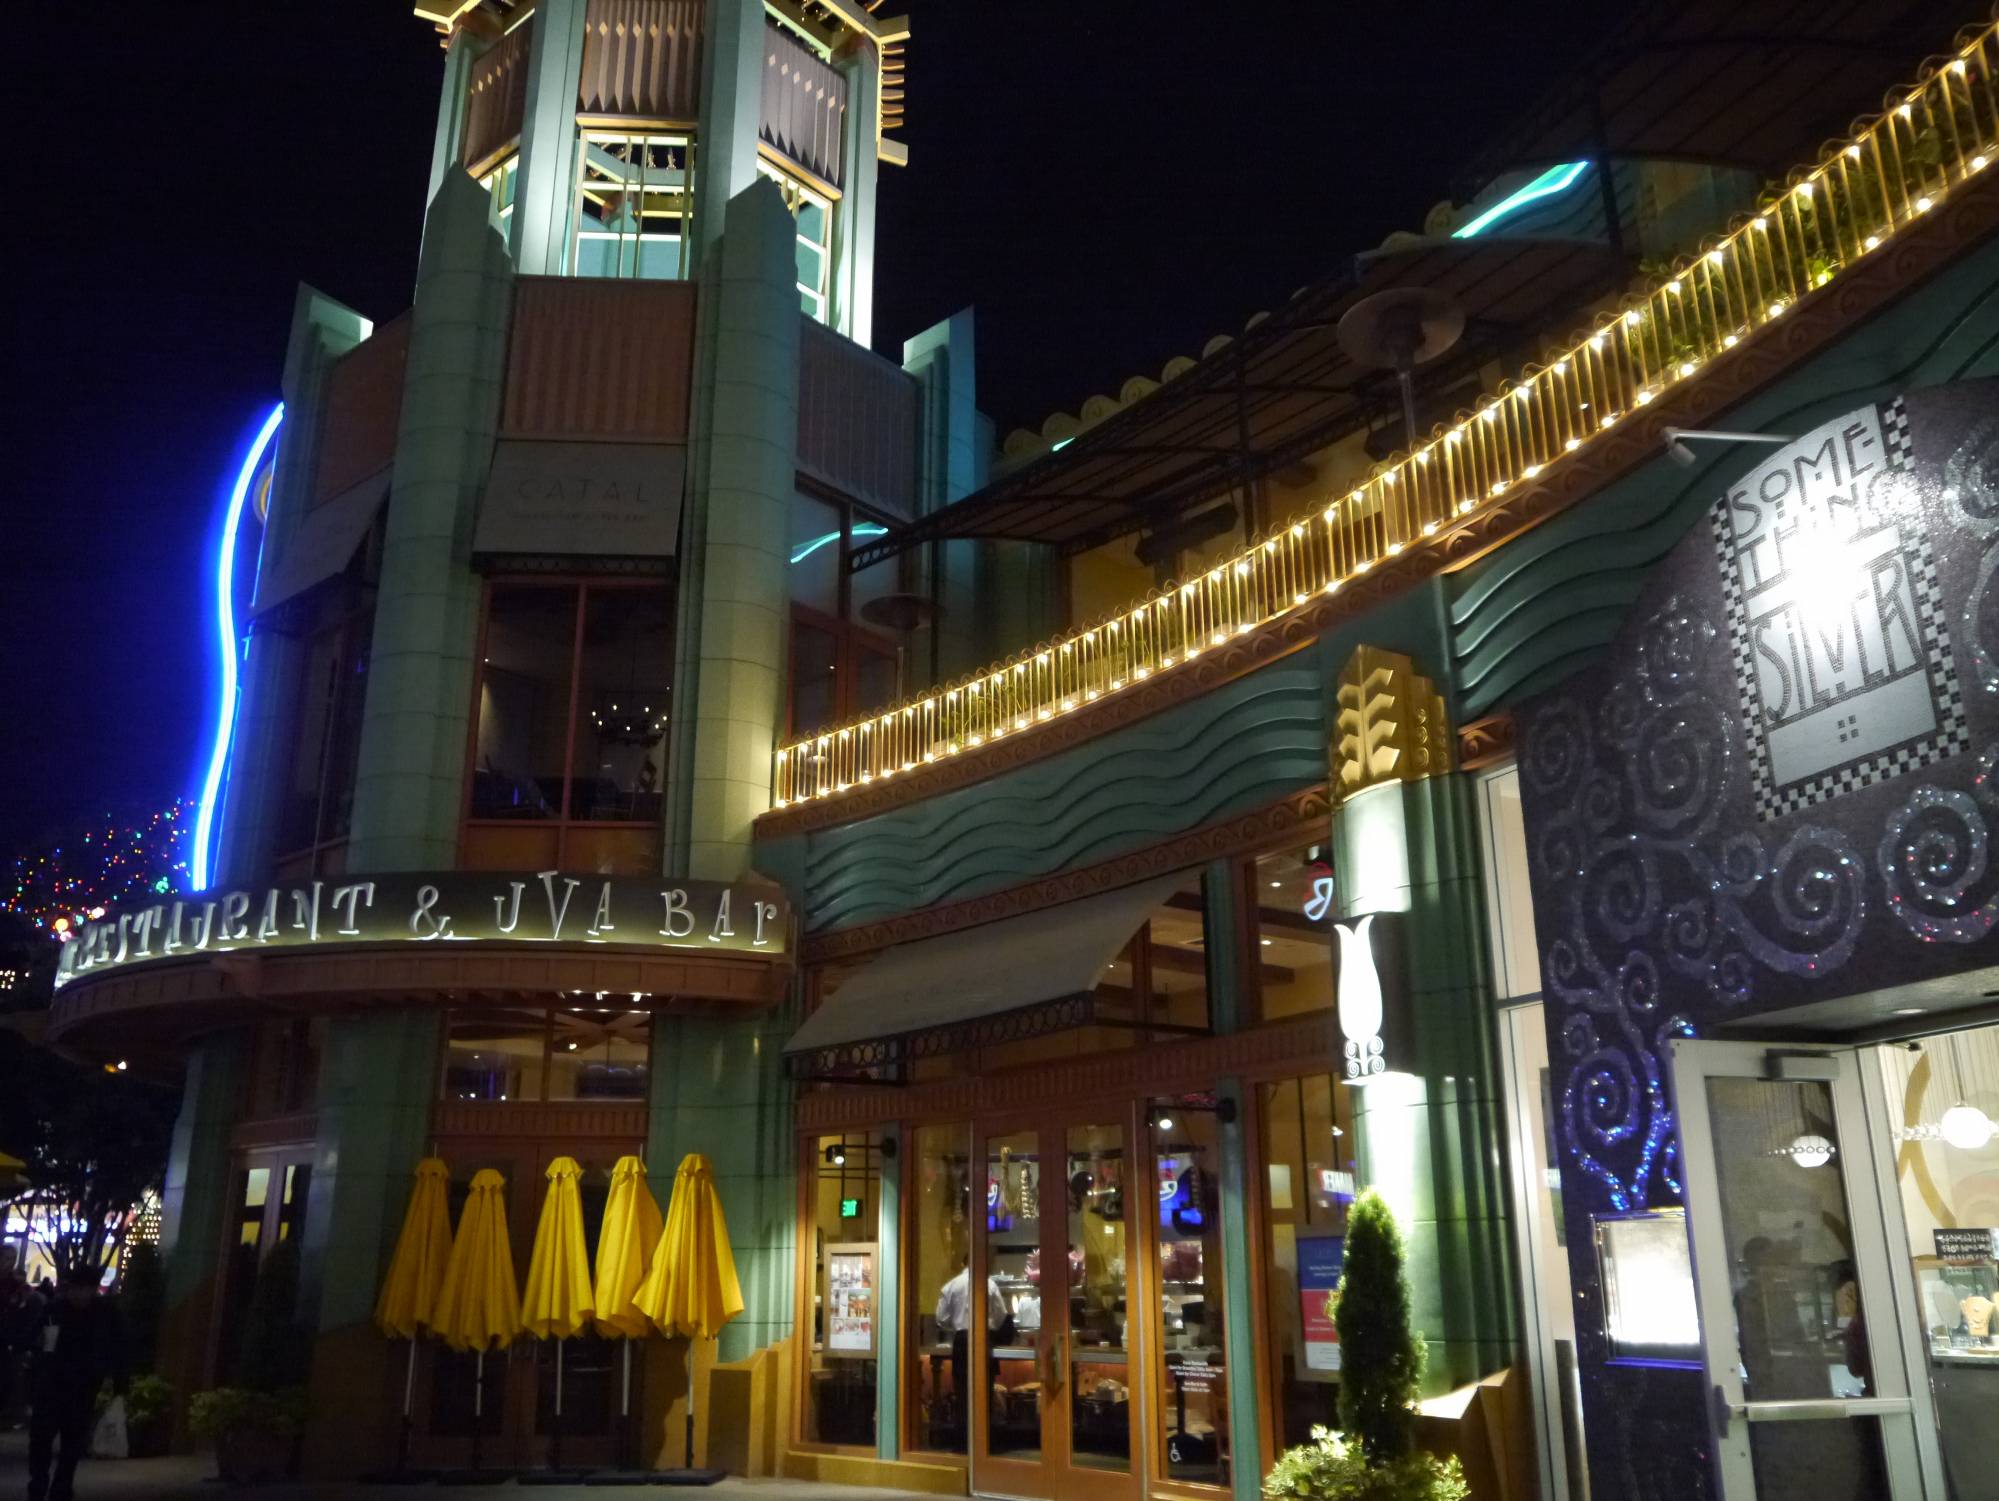 Enjoy the atmosphere and menu at Catal in Disneyland's Downtown Disney |PassPorter.com